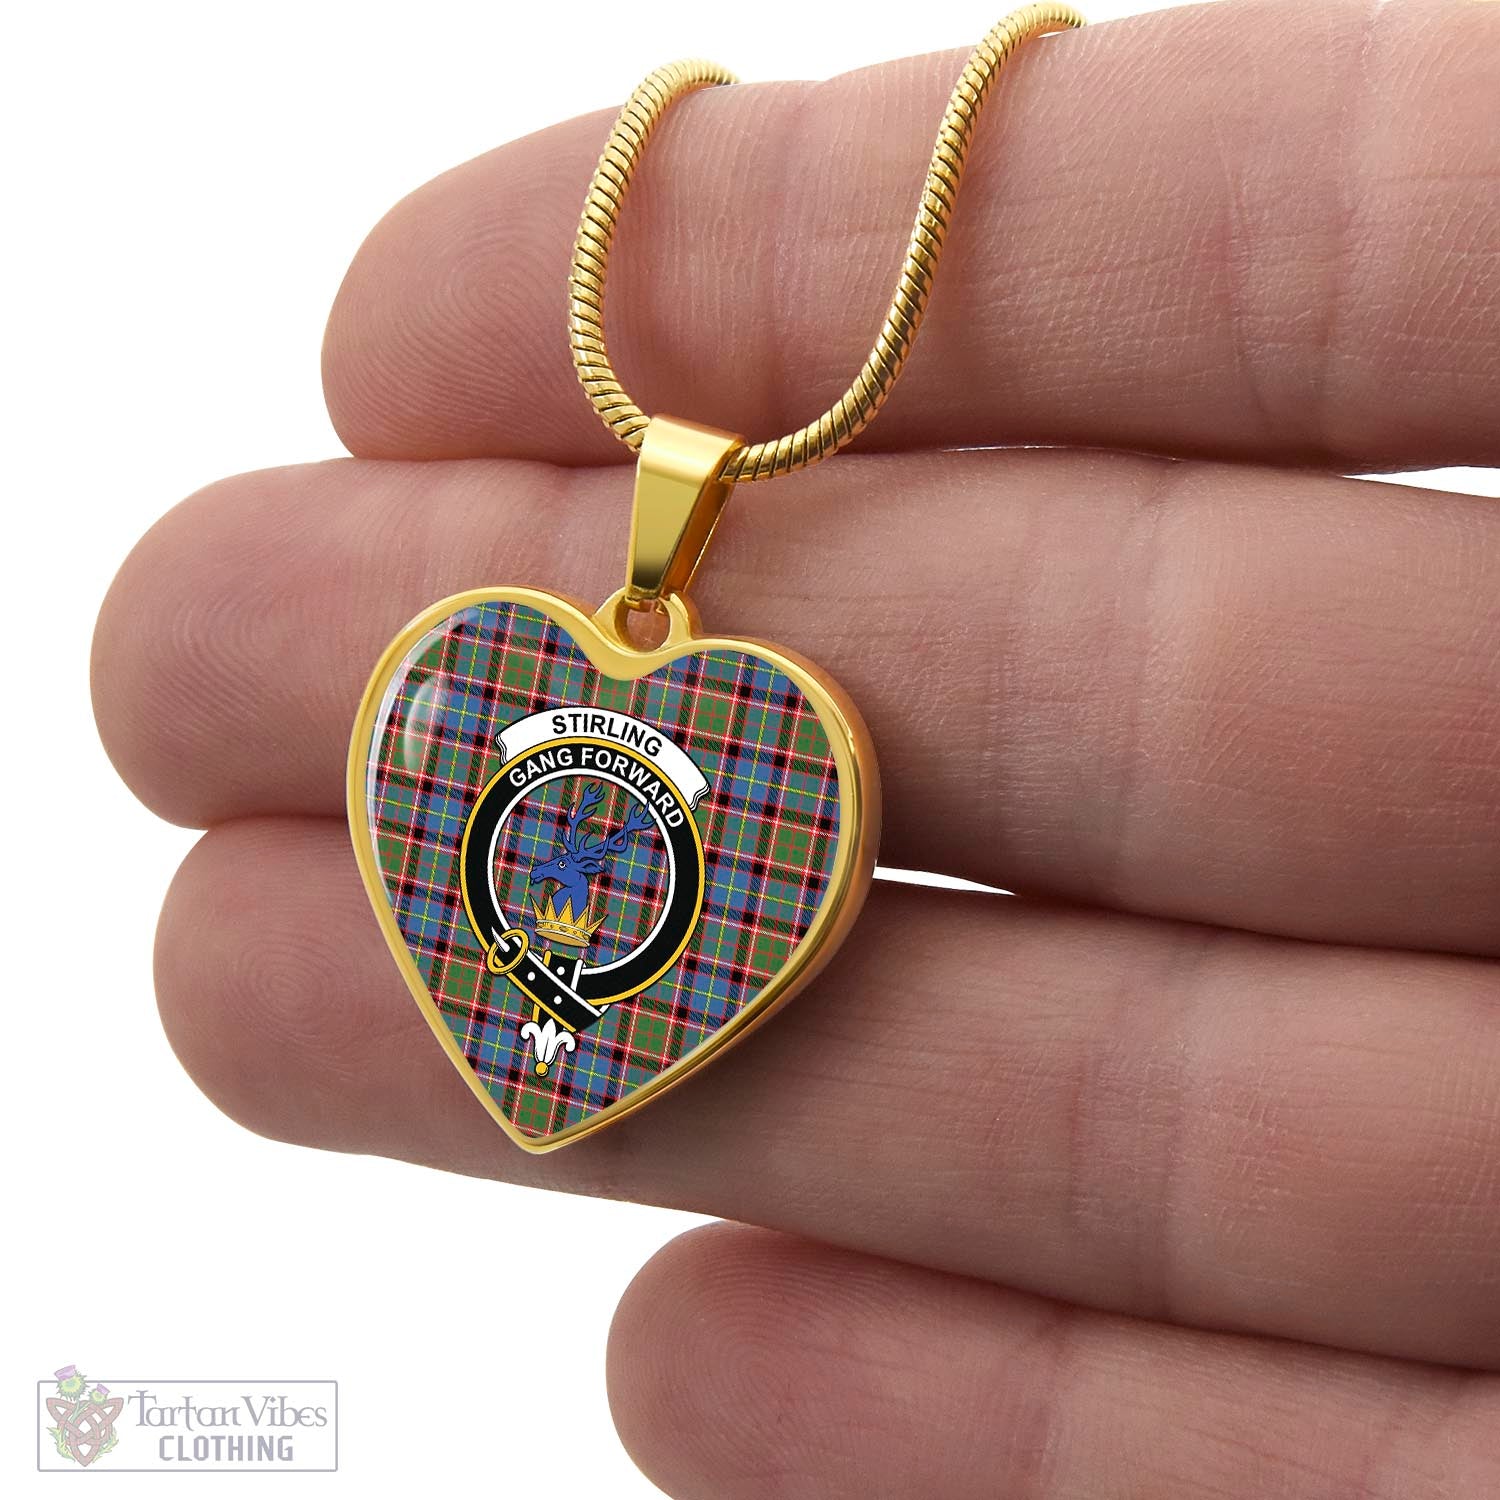 Tartan Vibes Clothing Stirling Bannockburn Tartan Heart Necklace with Family Crest